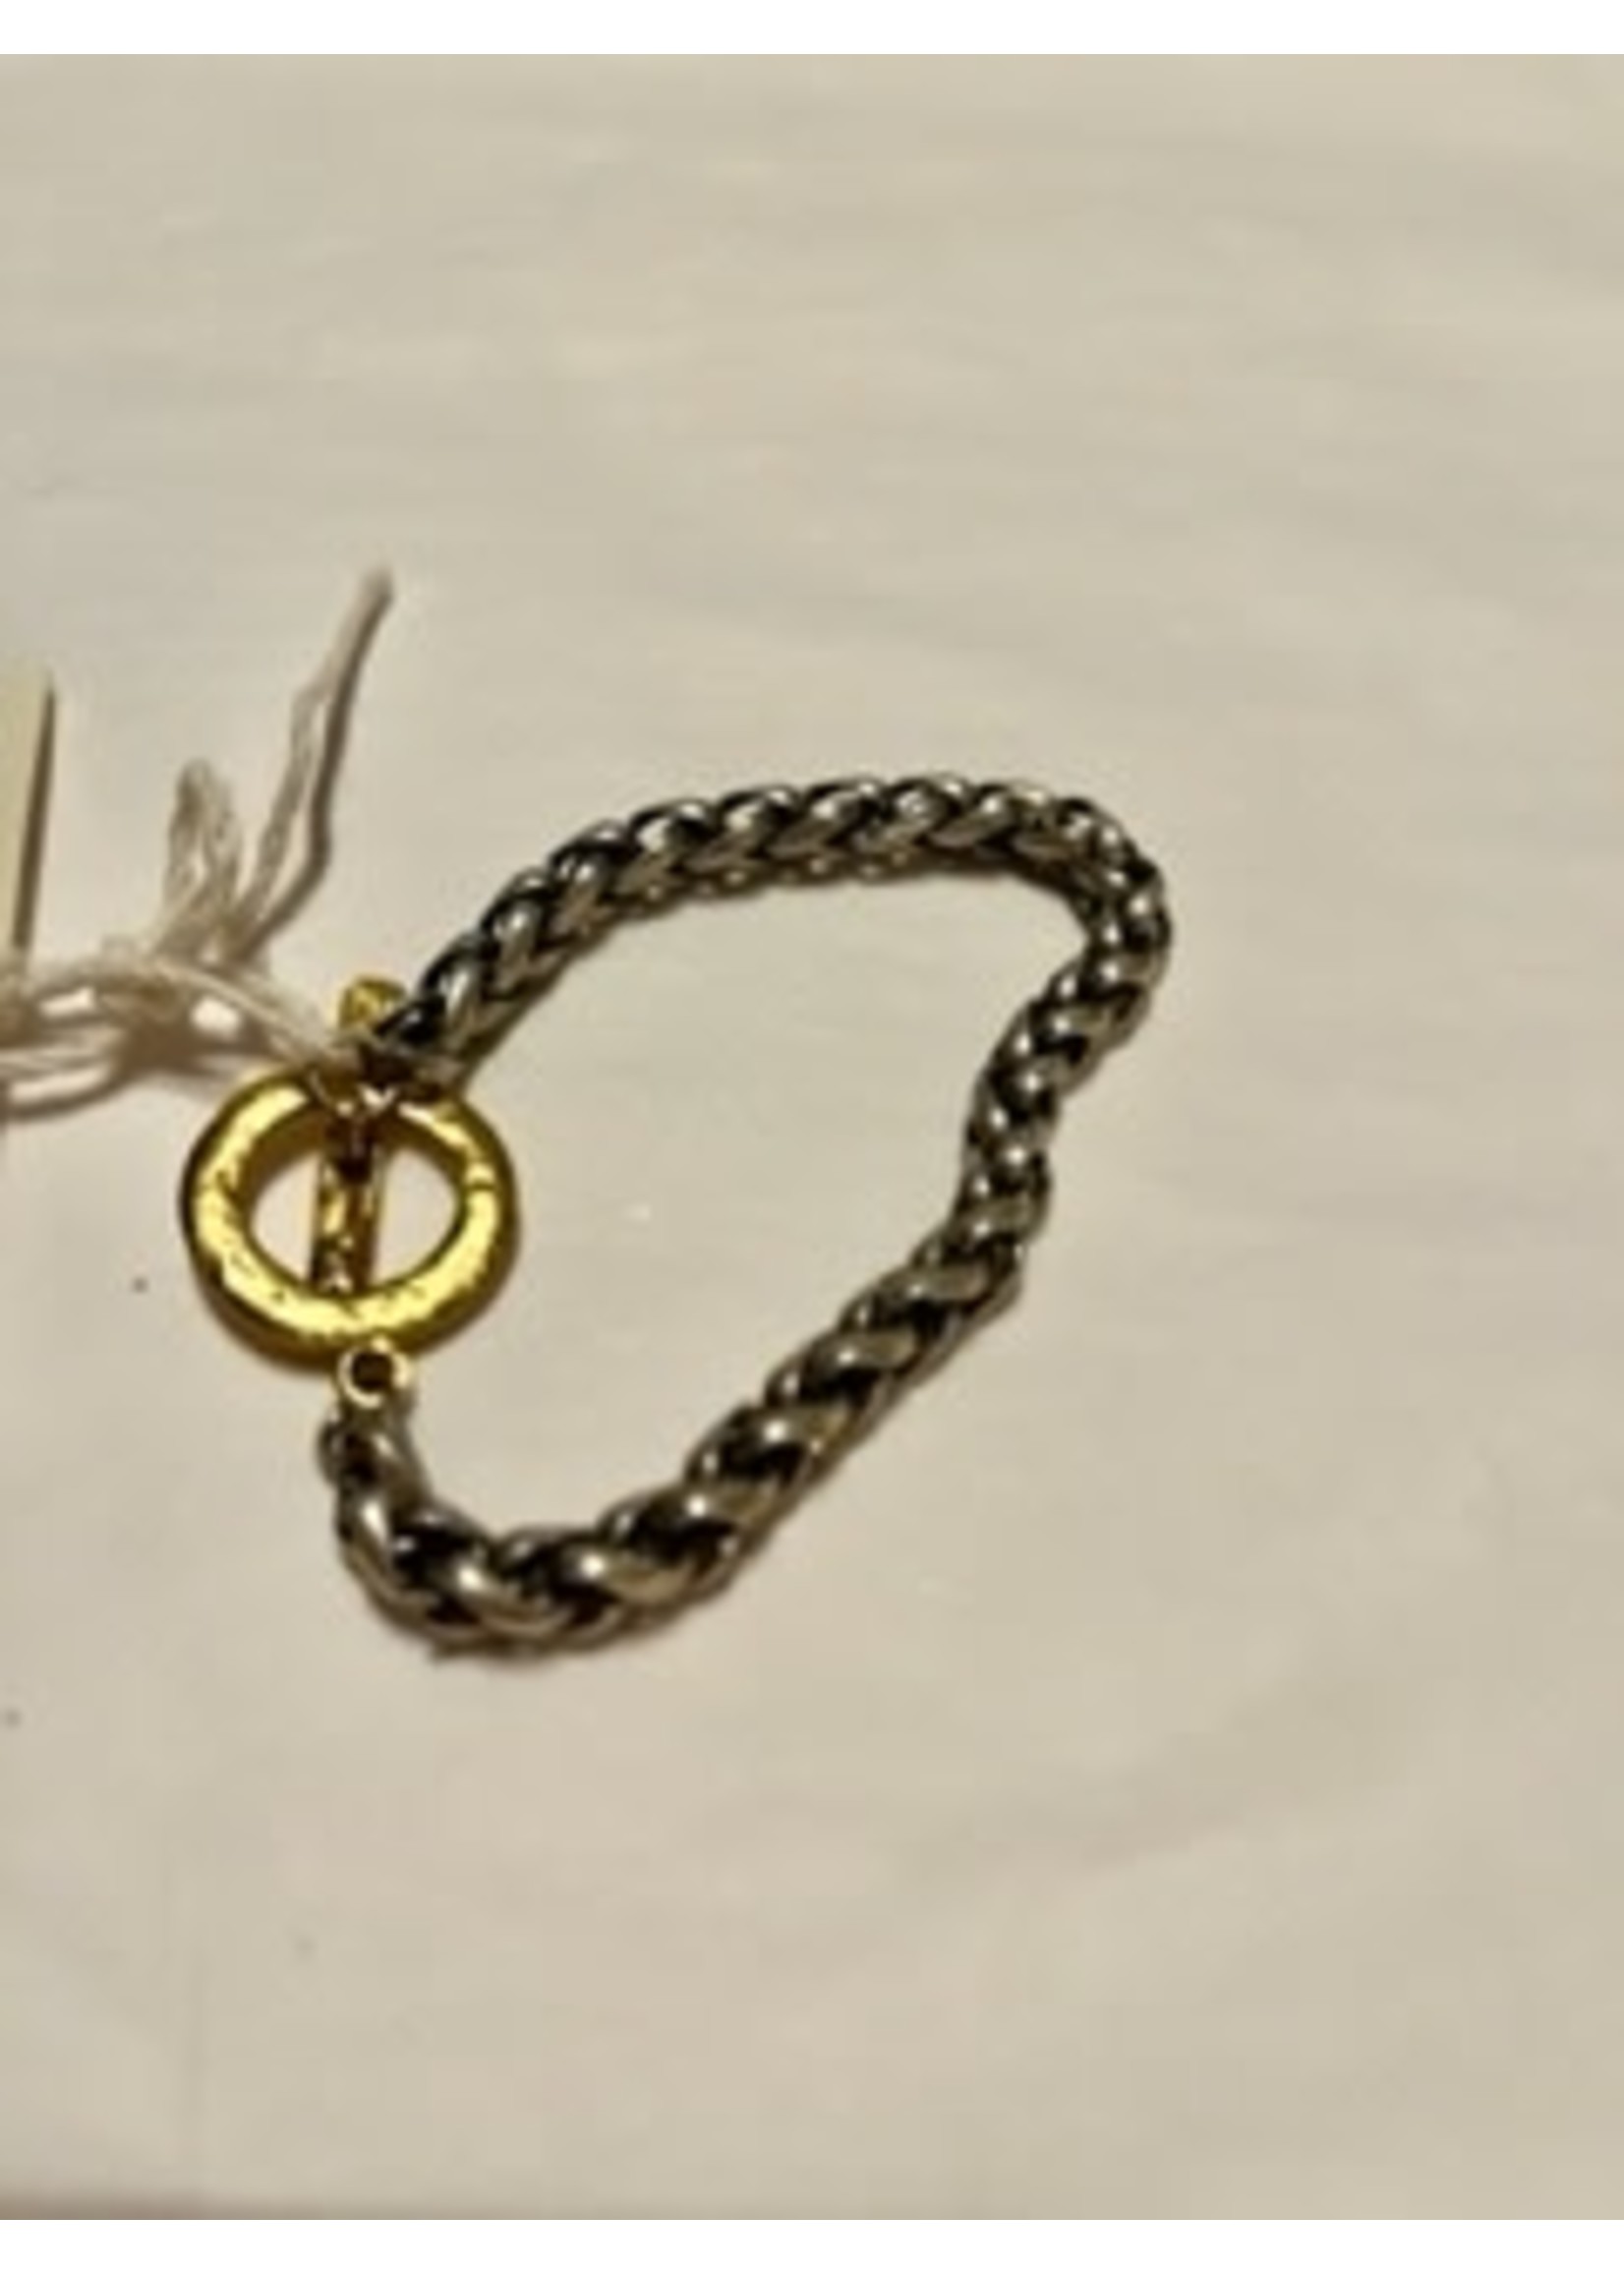 LJ Sonder Laken Bracelet Silver w/ Gold Toggle Closure